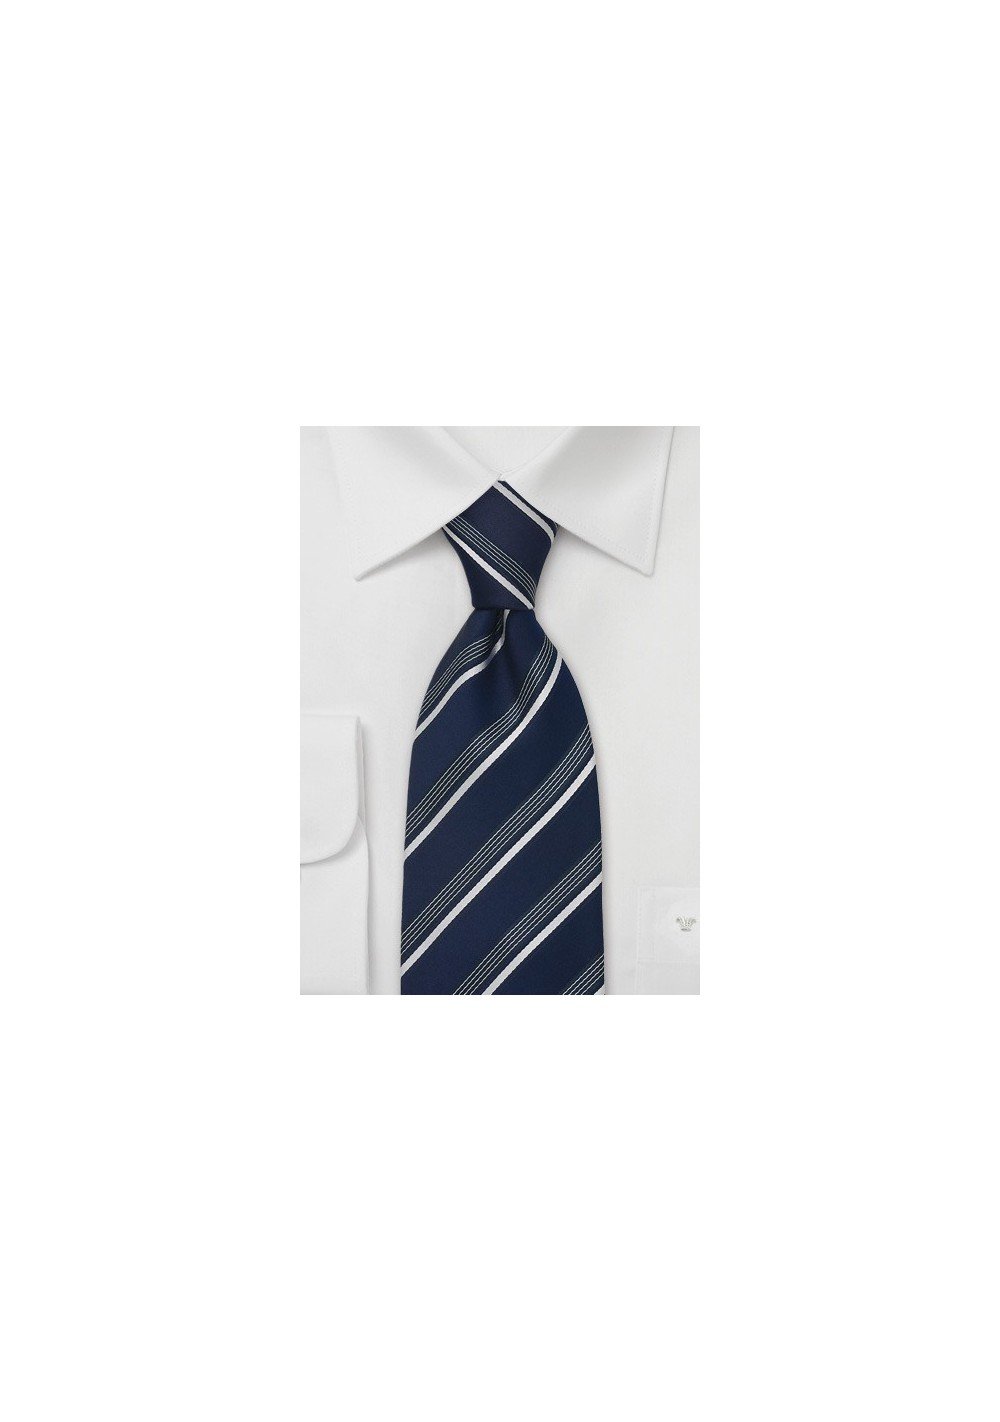 Sapphire Blue Striped Tie by Cavallieri